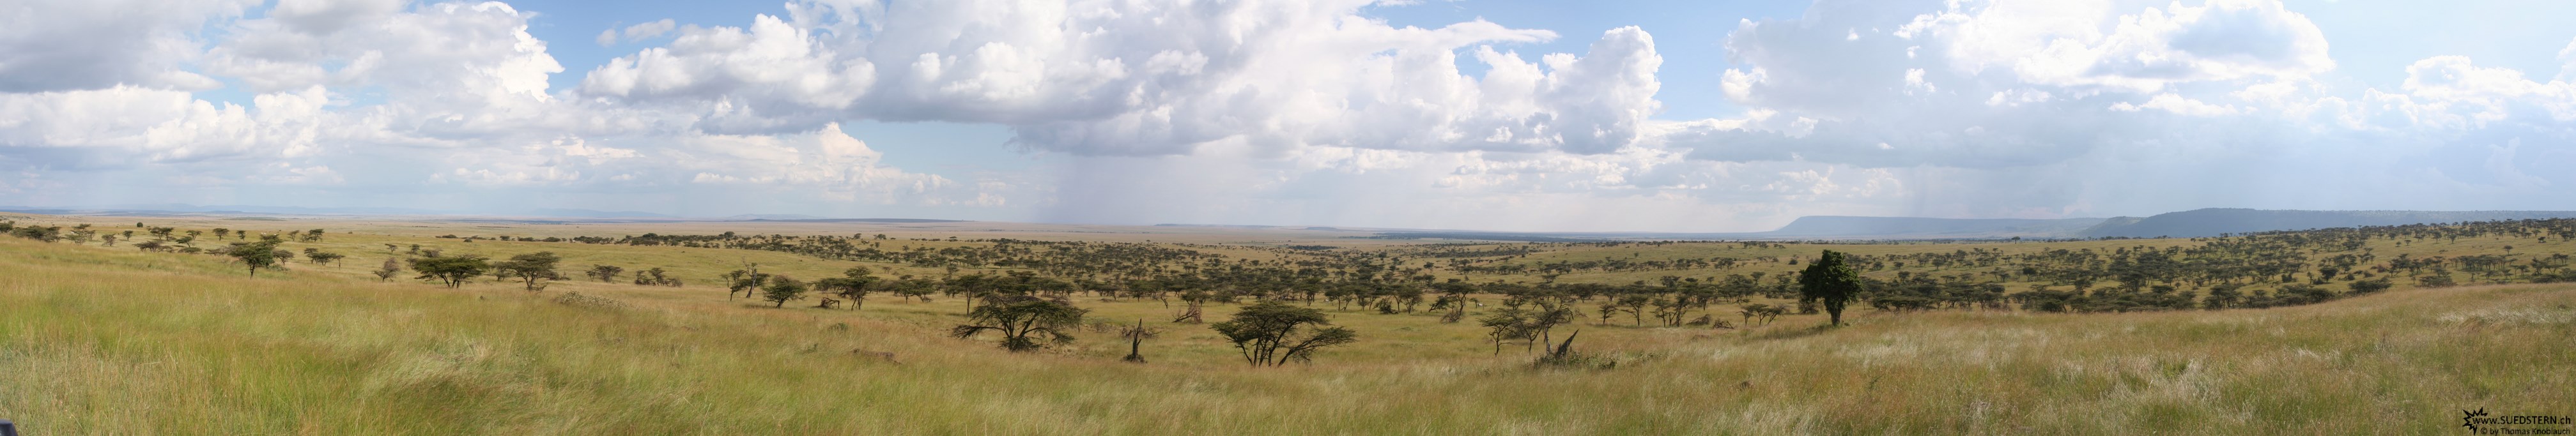 2007-04-15 - Kenya - Massai Mara looking to Tansania Panorama